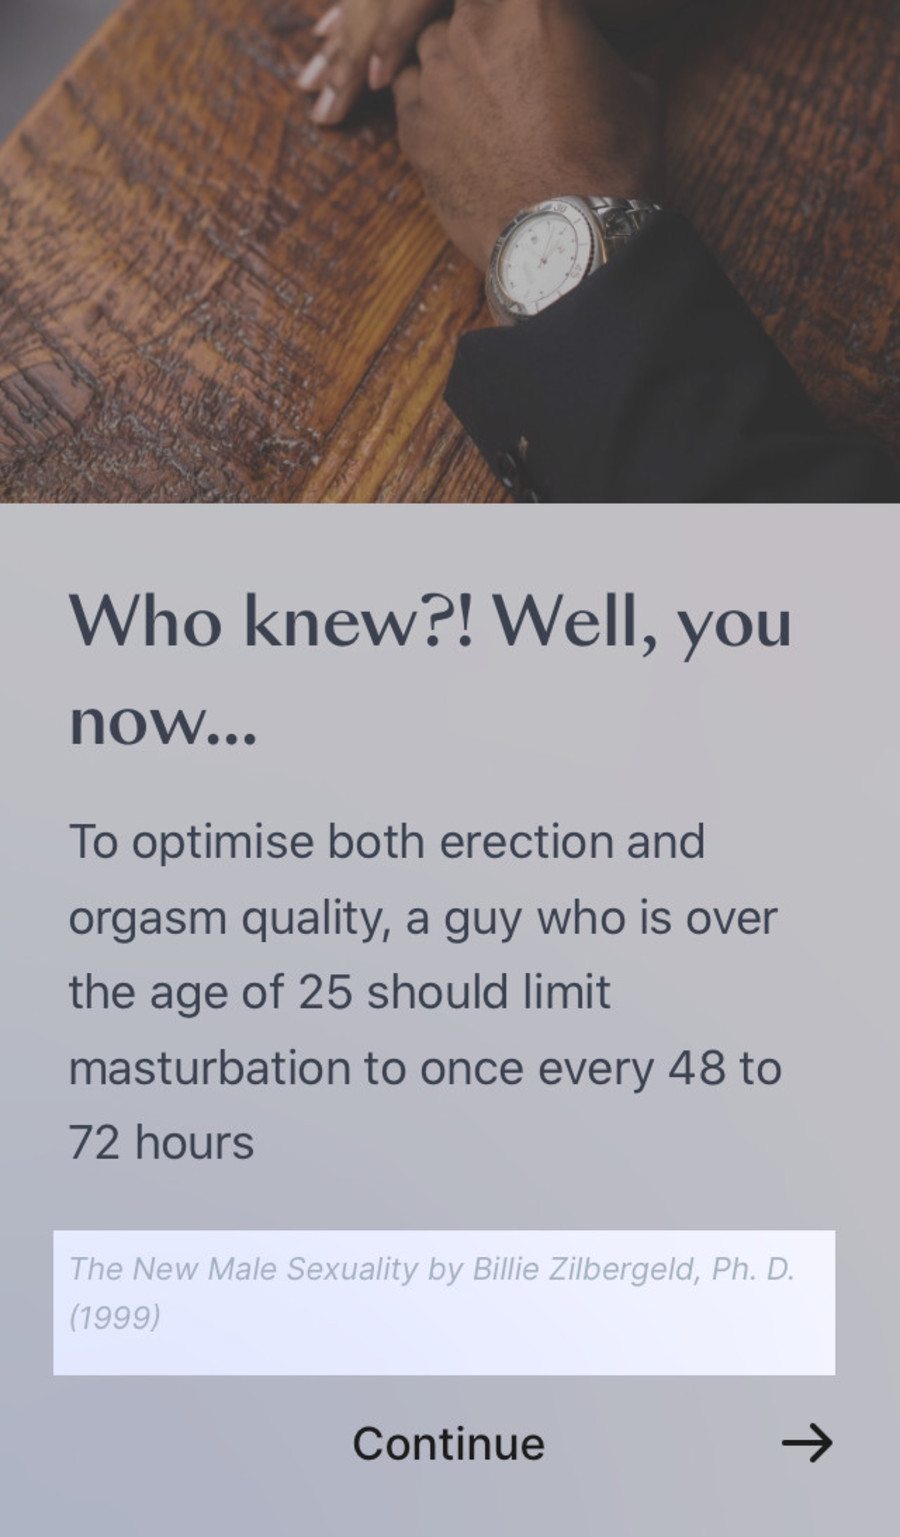 Optimise both erection and orgasm quality.